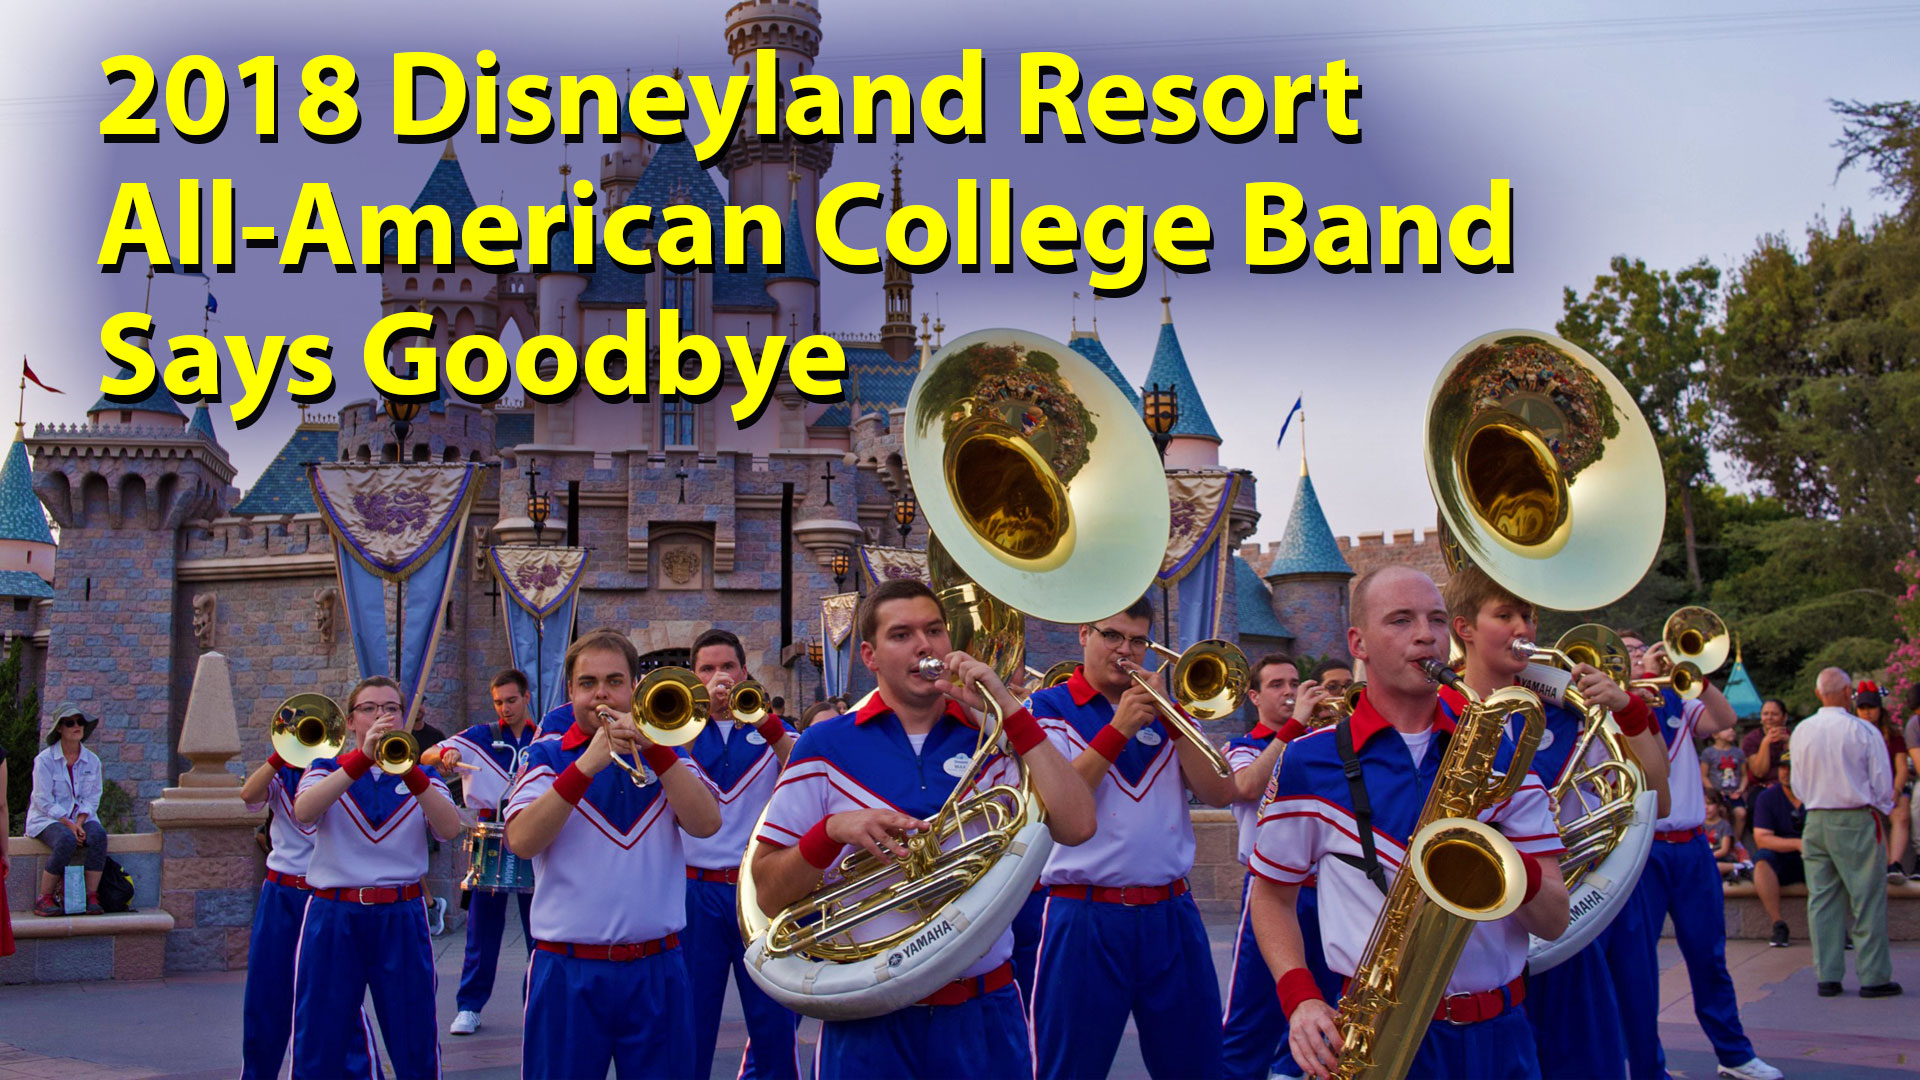 2018 Disneyland Resort All-American College Band Says Goodbye